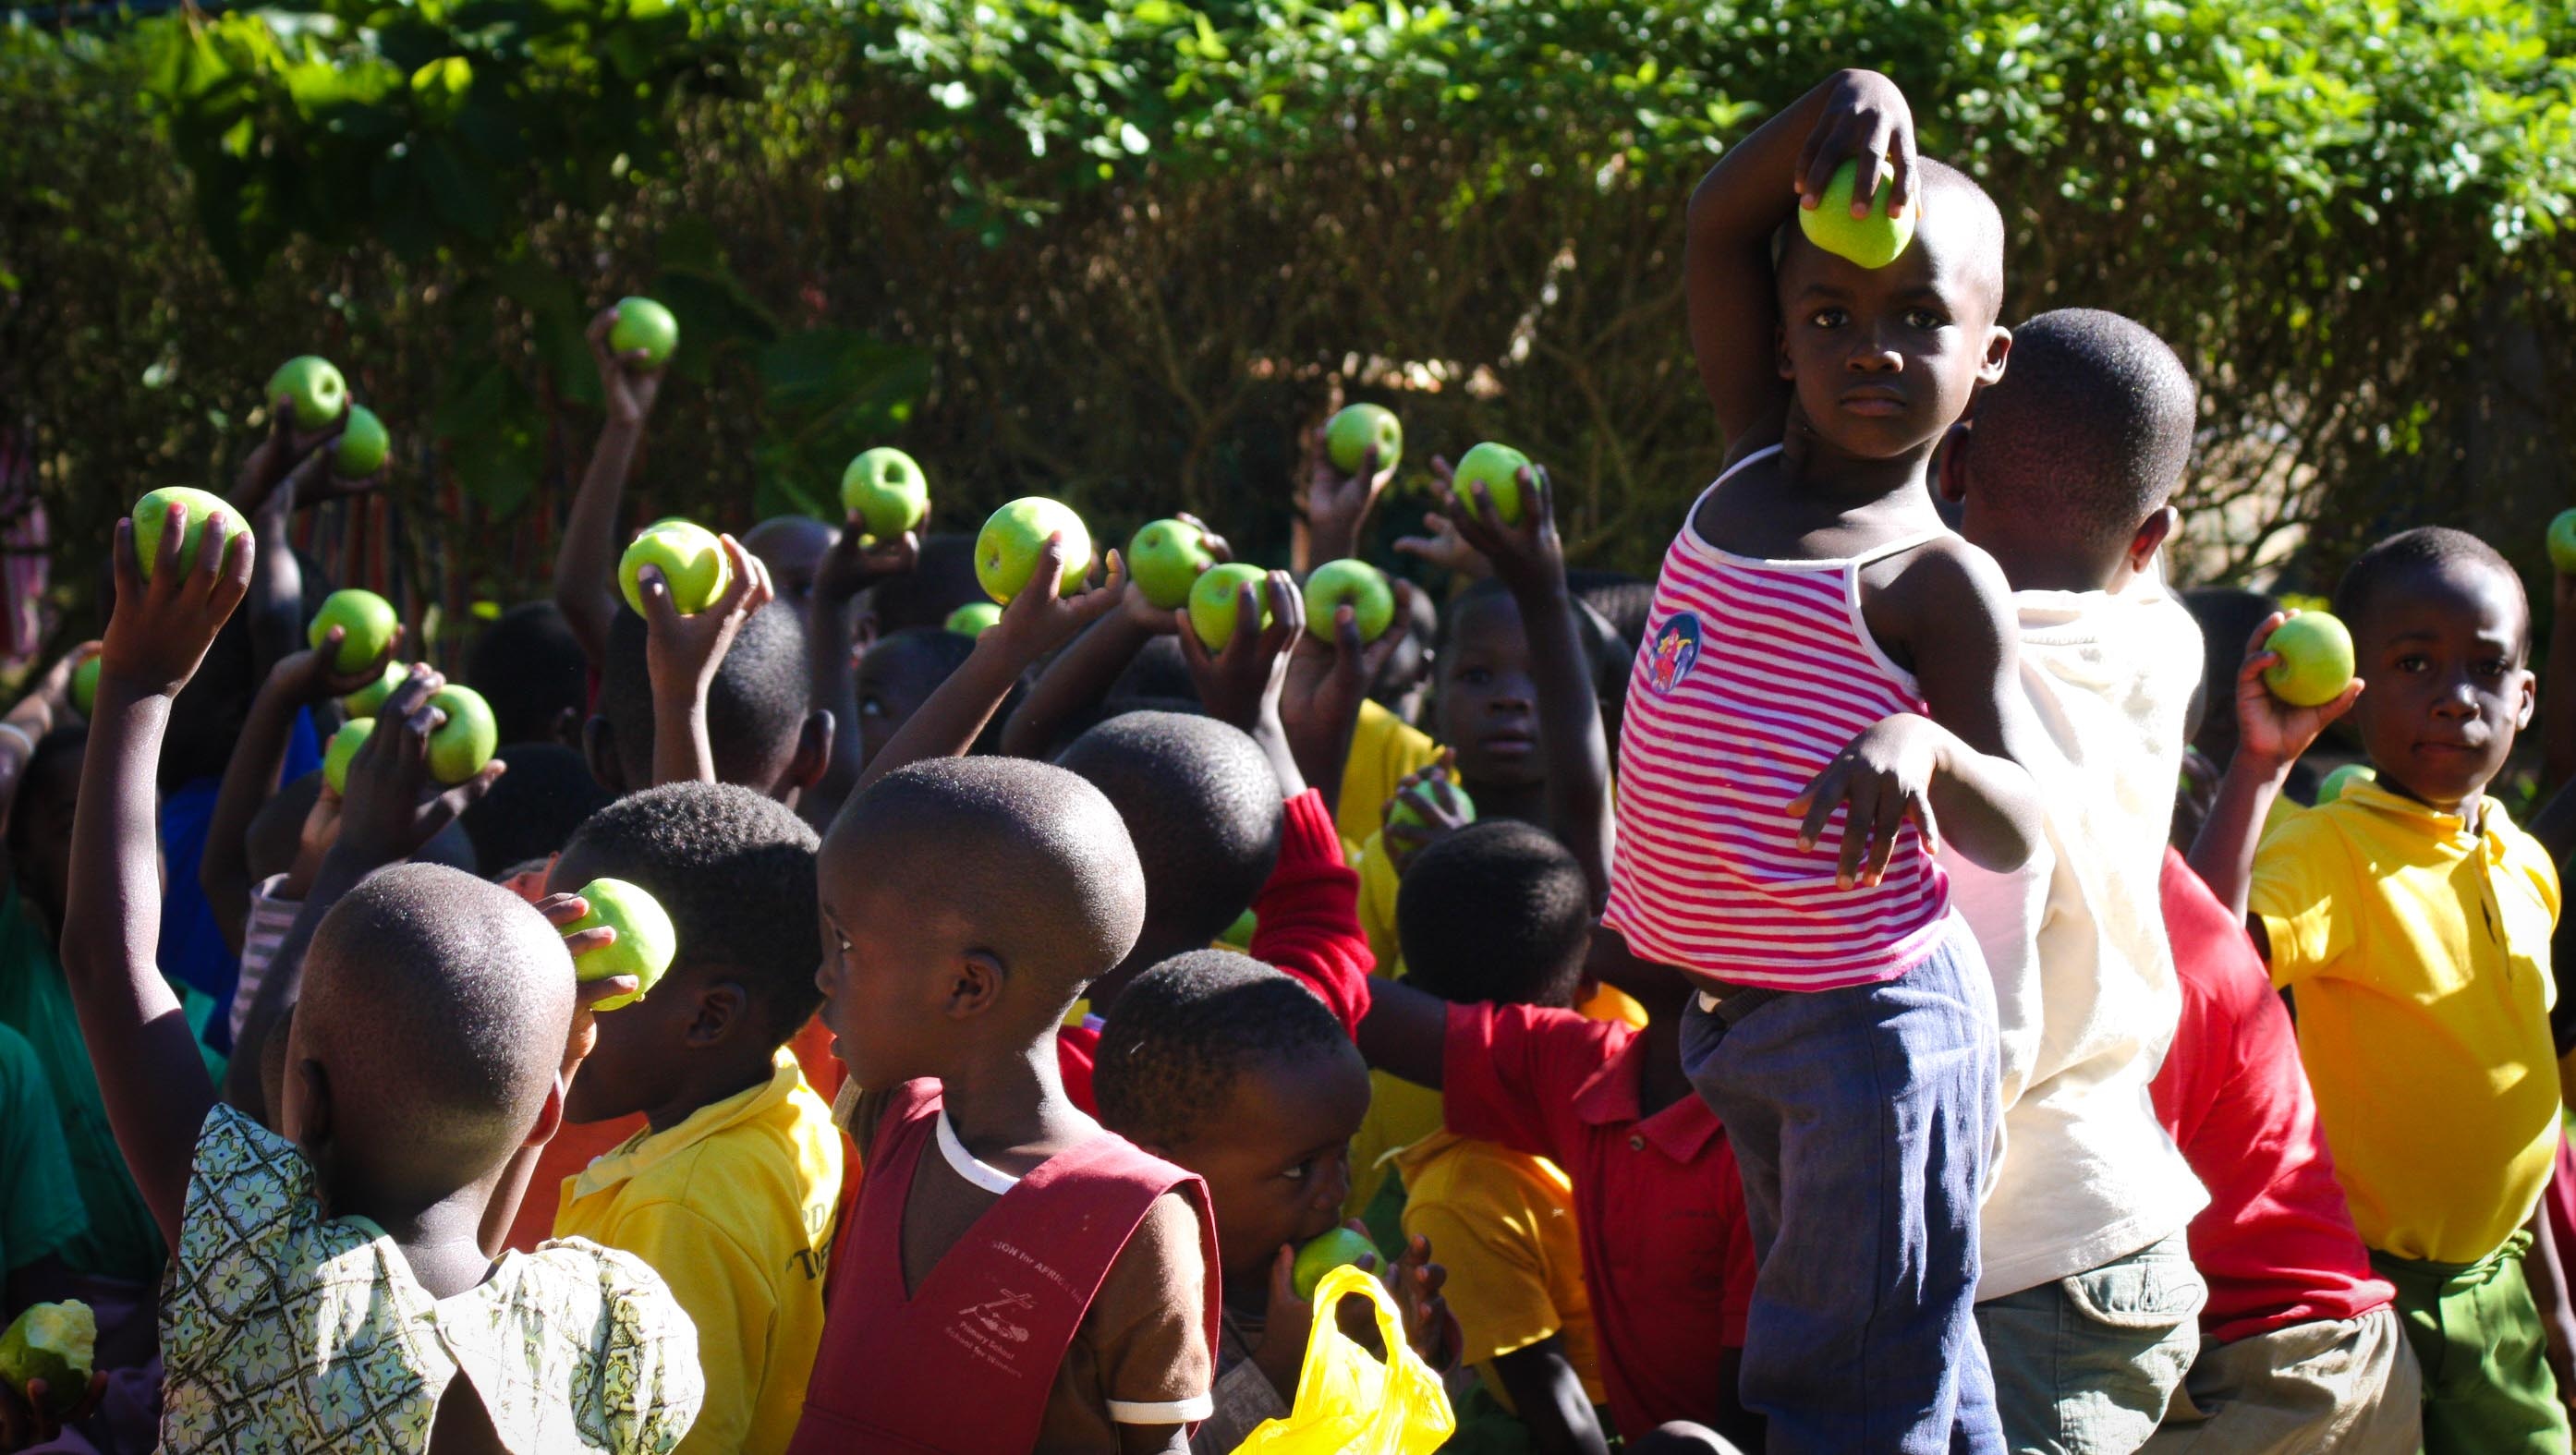 cluster of children holding green round fruit